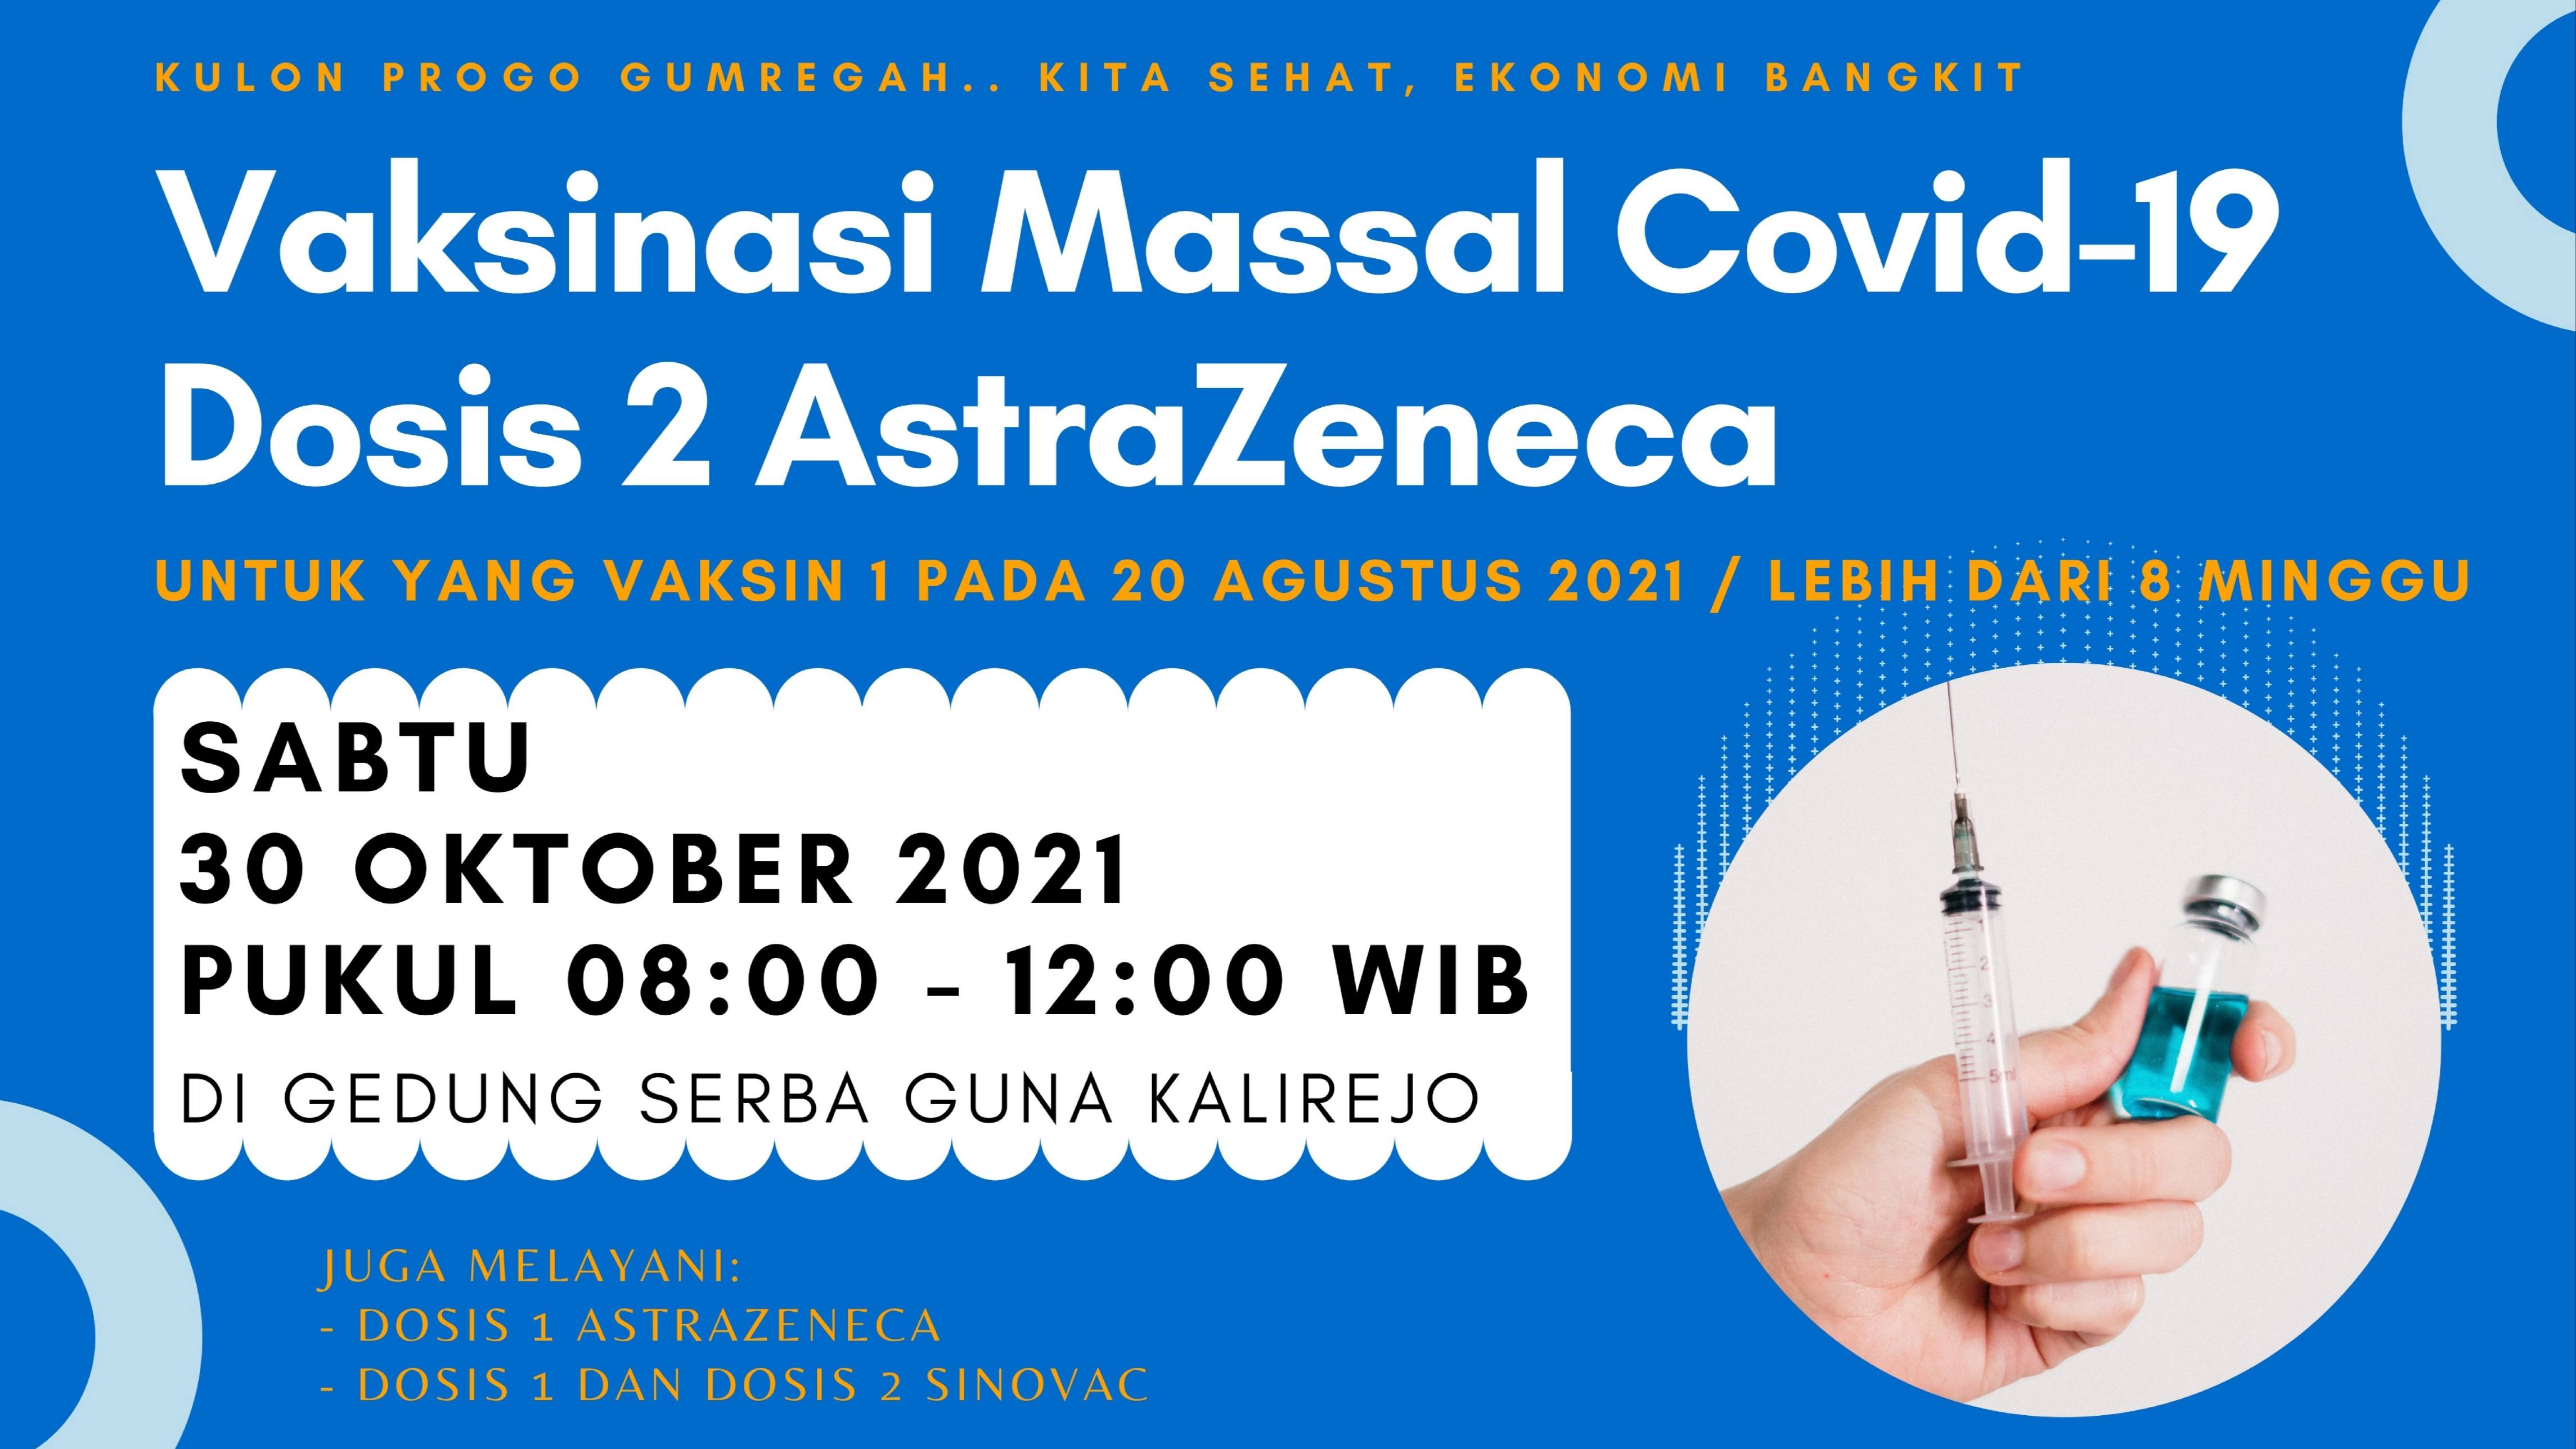 Vaksinasi Massal Covid-19 Astrazeneca Dosis 2, 30 Oktober 2021